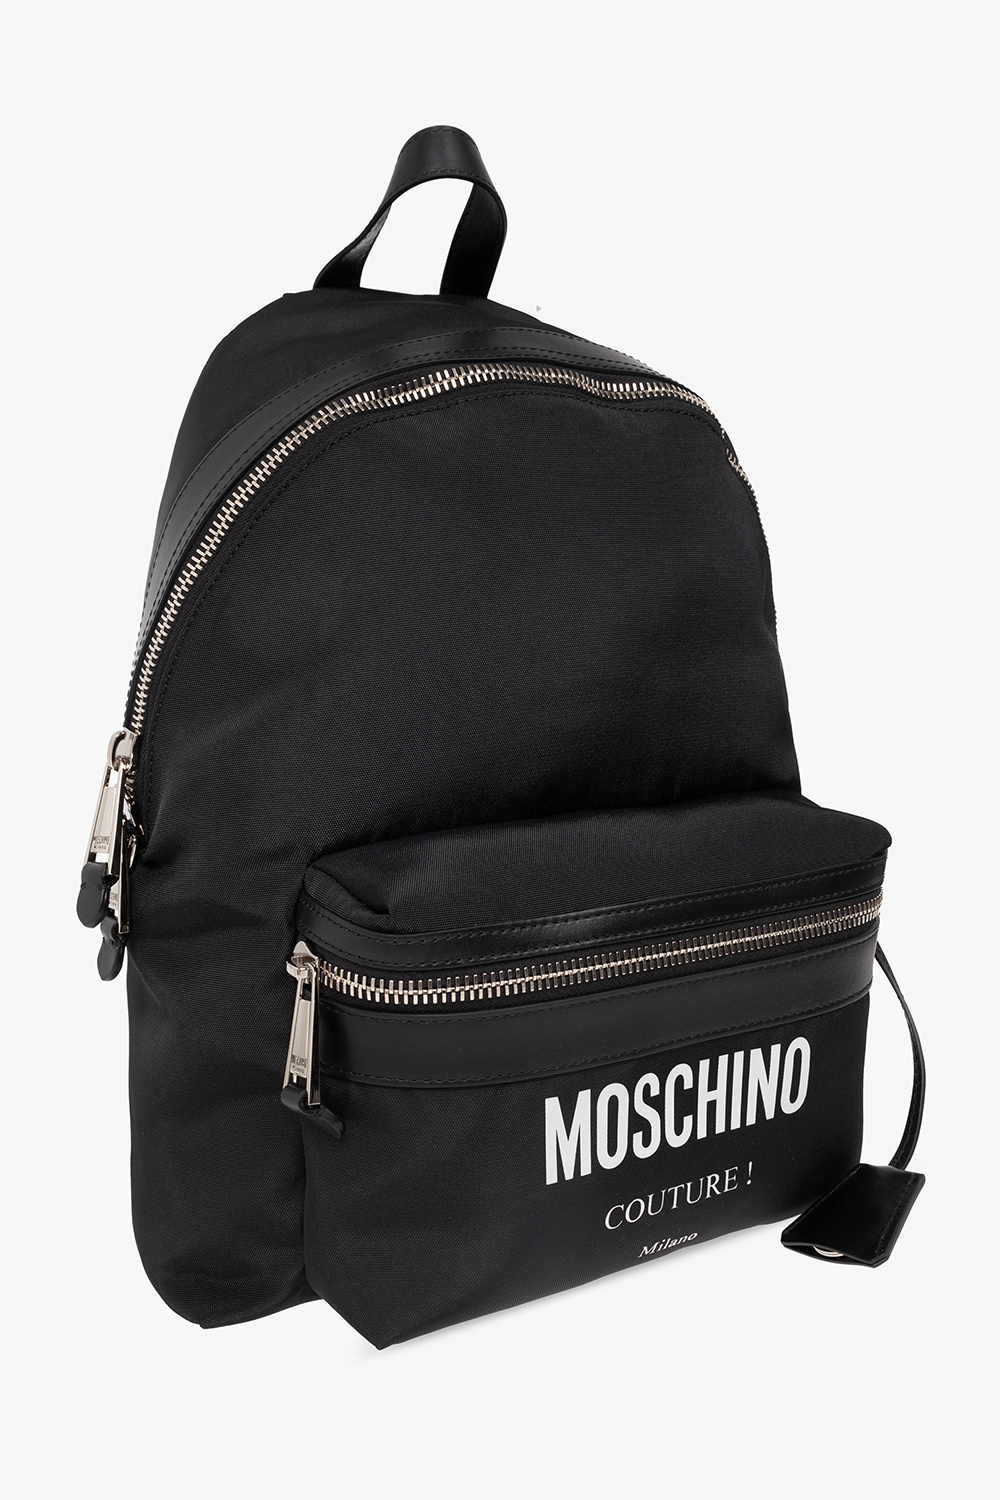 Moschino Geantă BILLABONG Essential Bag C9BG15BIP2 Antique White 4409